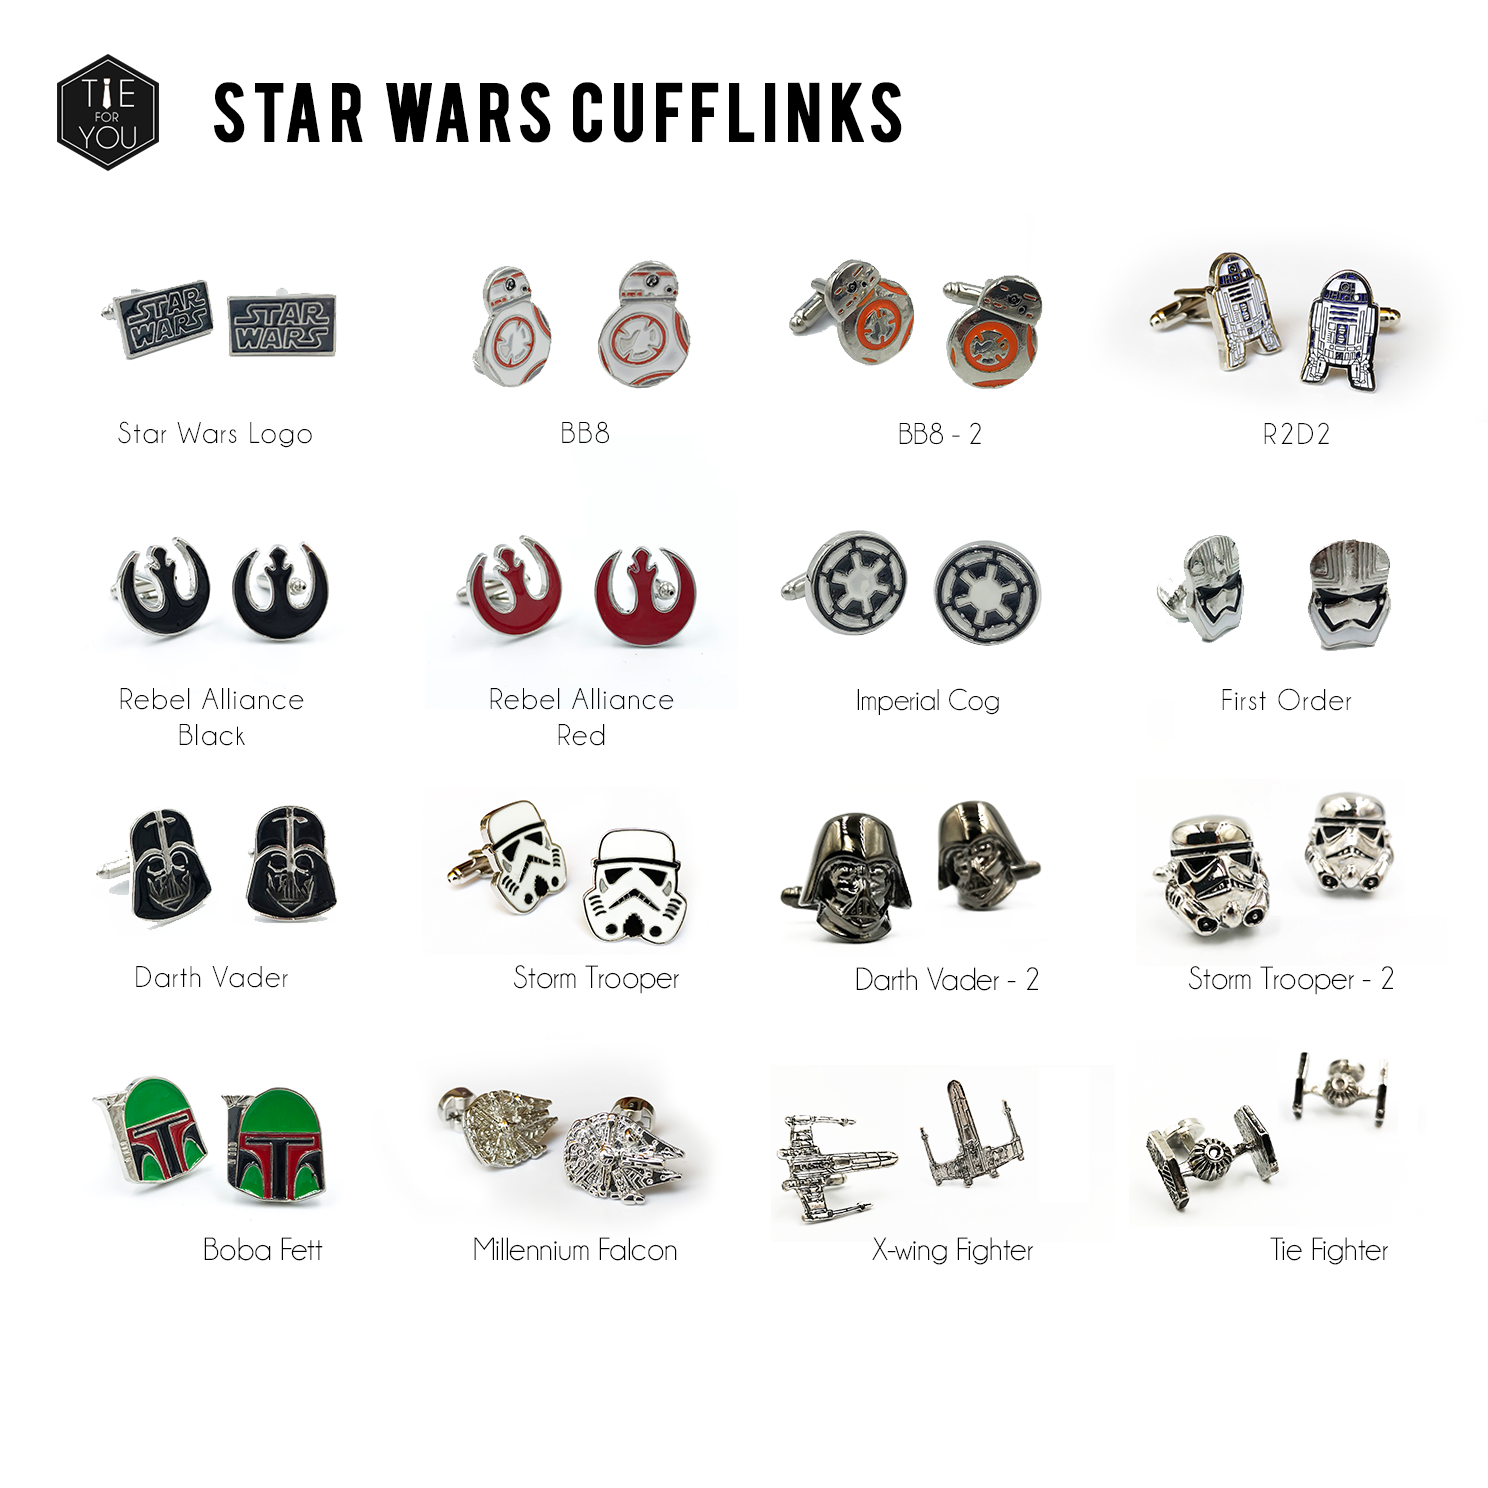 CENWA Star Wars Cufflinks Rebel Alliance Cufflinks Sci Fi Geek Movie Cufflinks Jewelry Gift for Star Wars Fans 